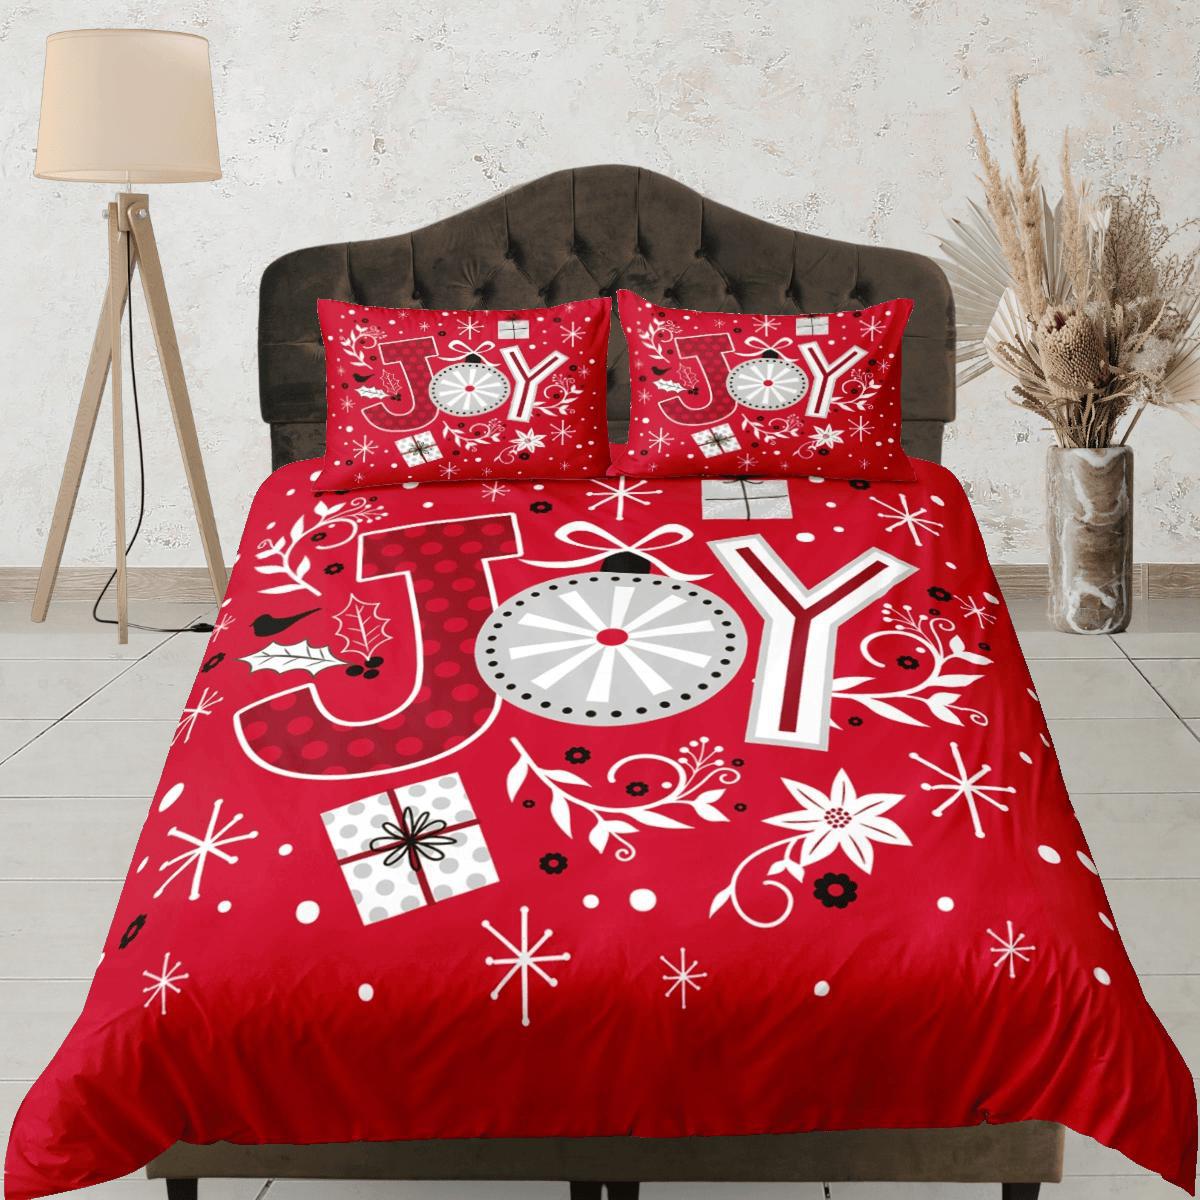 daintyduvet Christmas Duvet Cover Set and Christmas Pillows Red Bedding Comforter Cover Christmas Gift